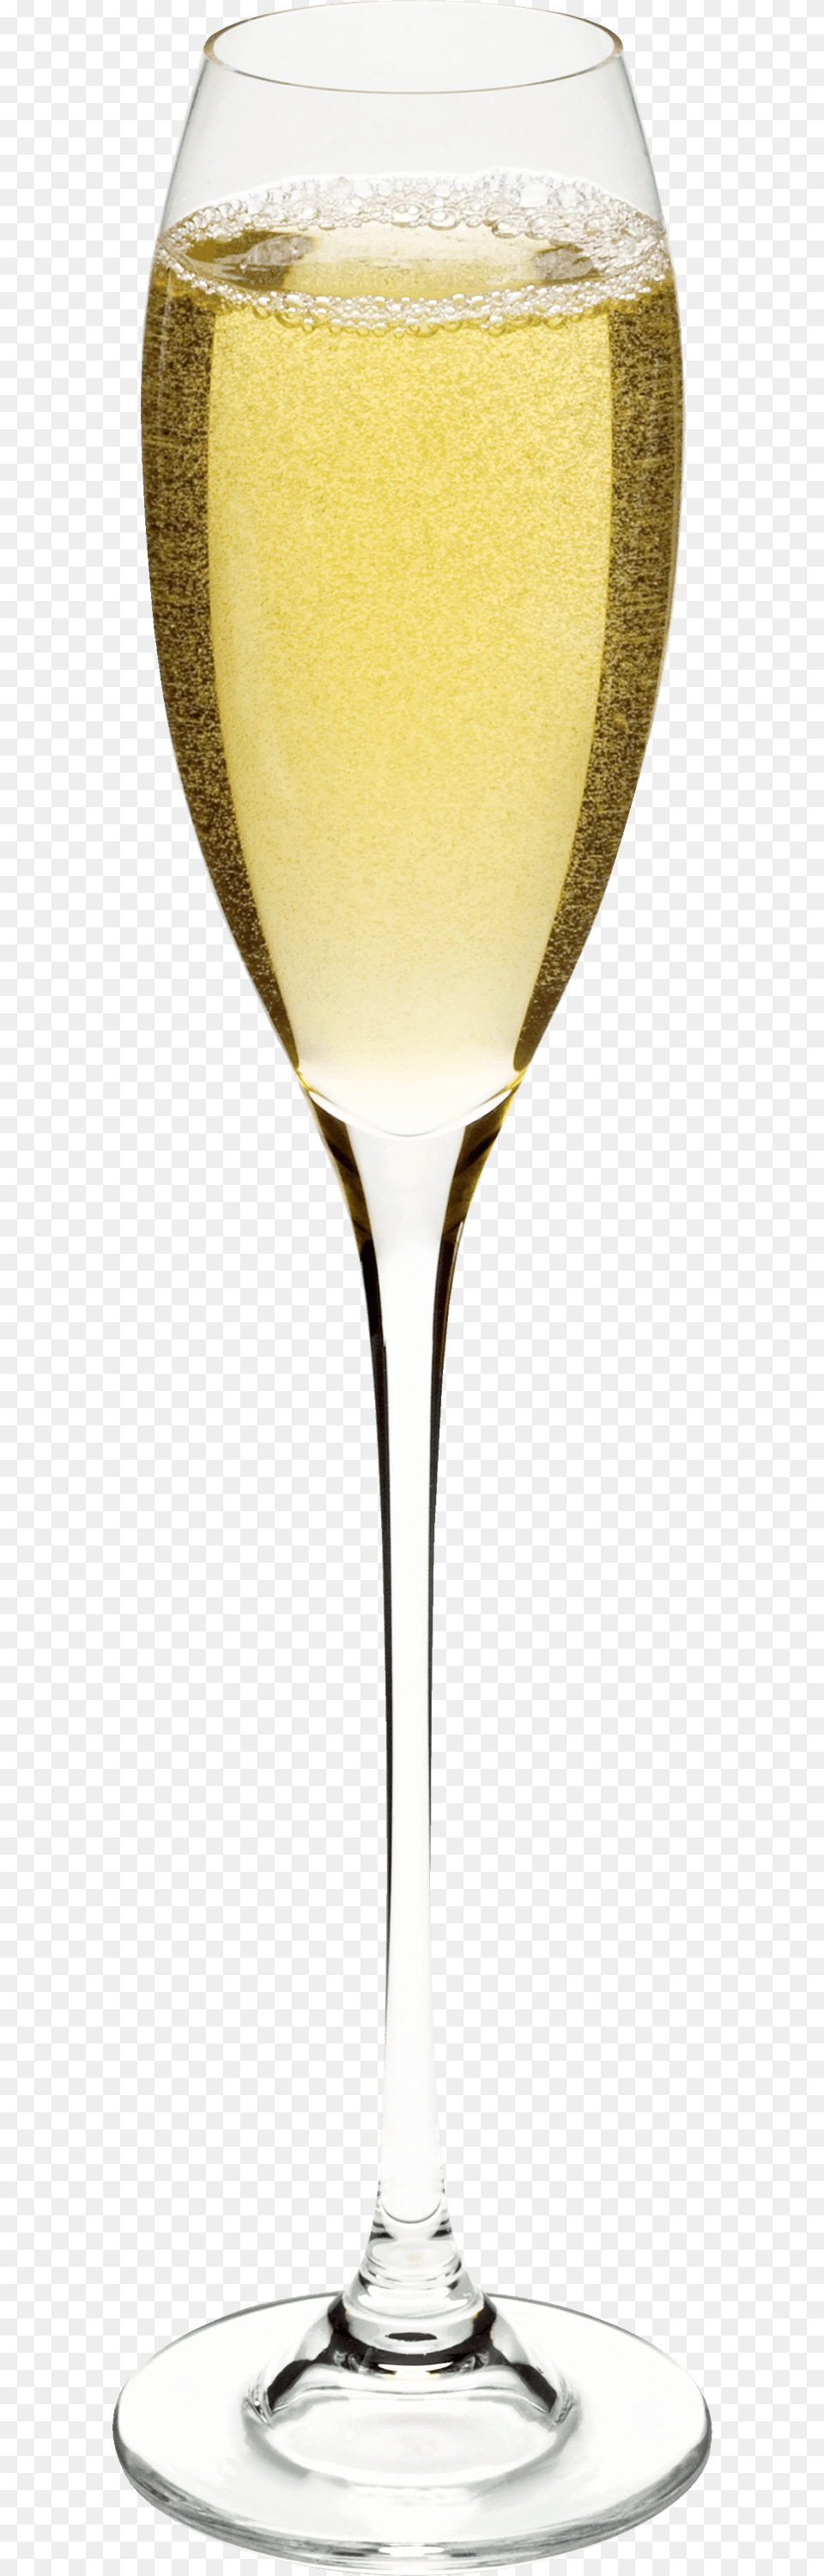 Wine Glass Bokal Shampanskogo, Alcohol, Beverage, Liquor, Wine Glass Png Image